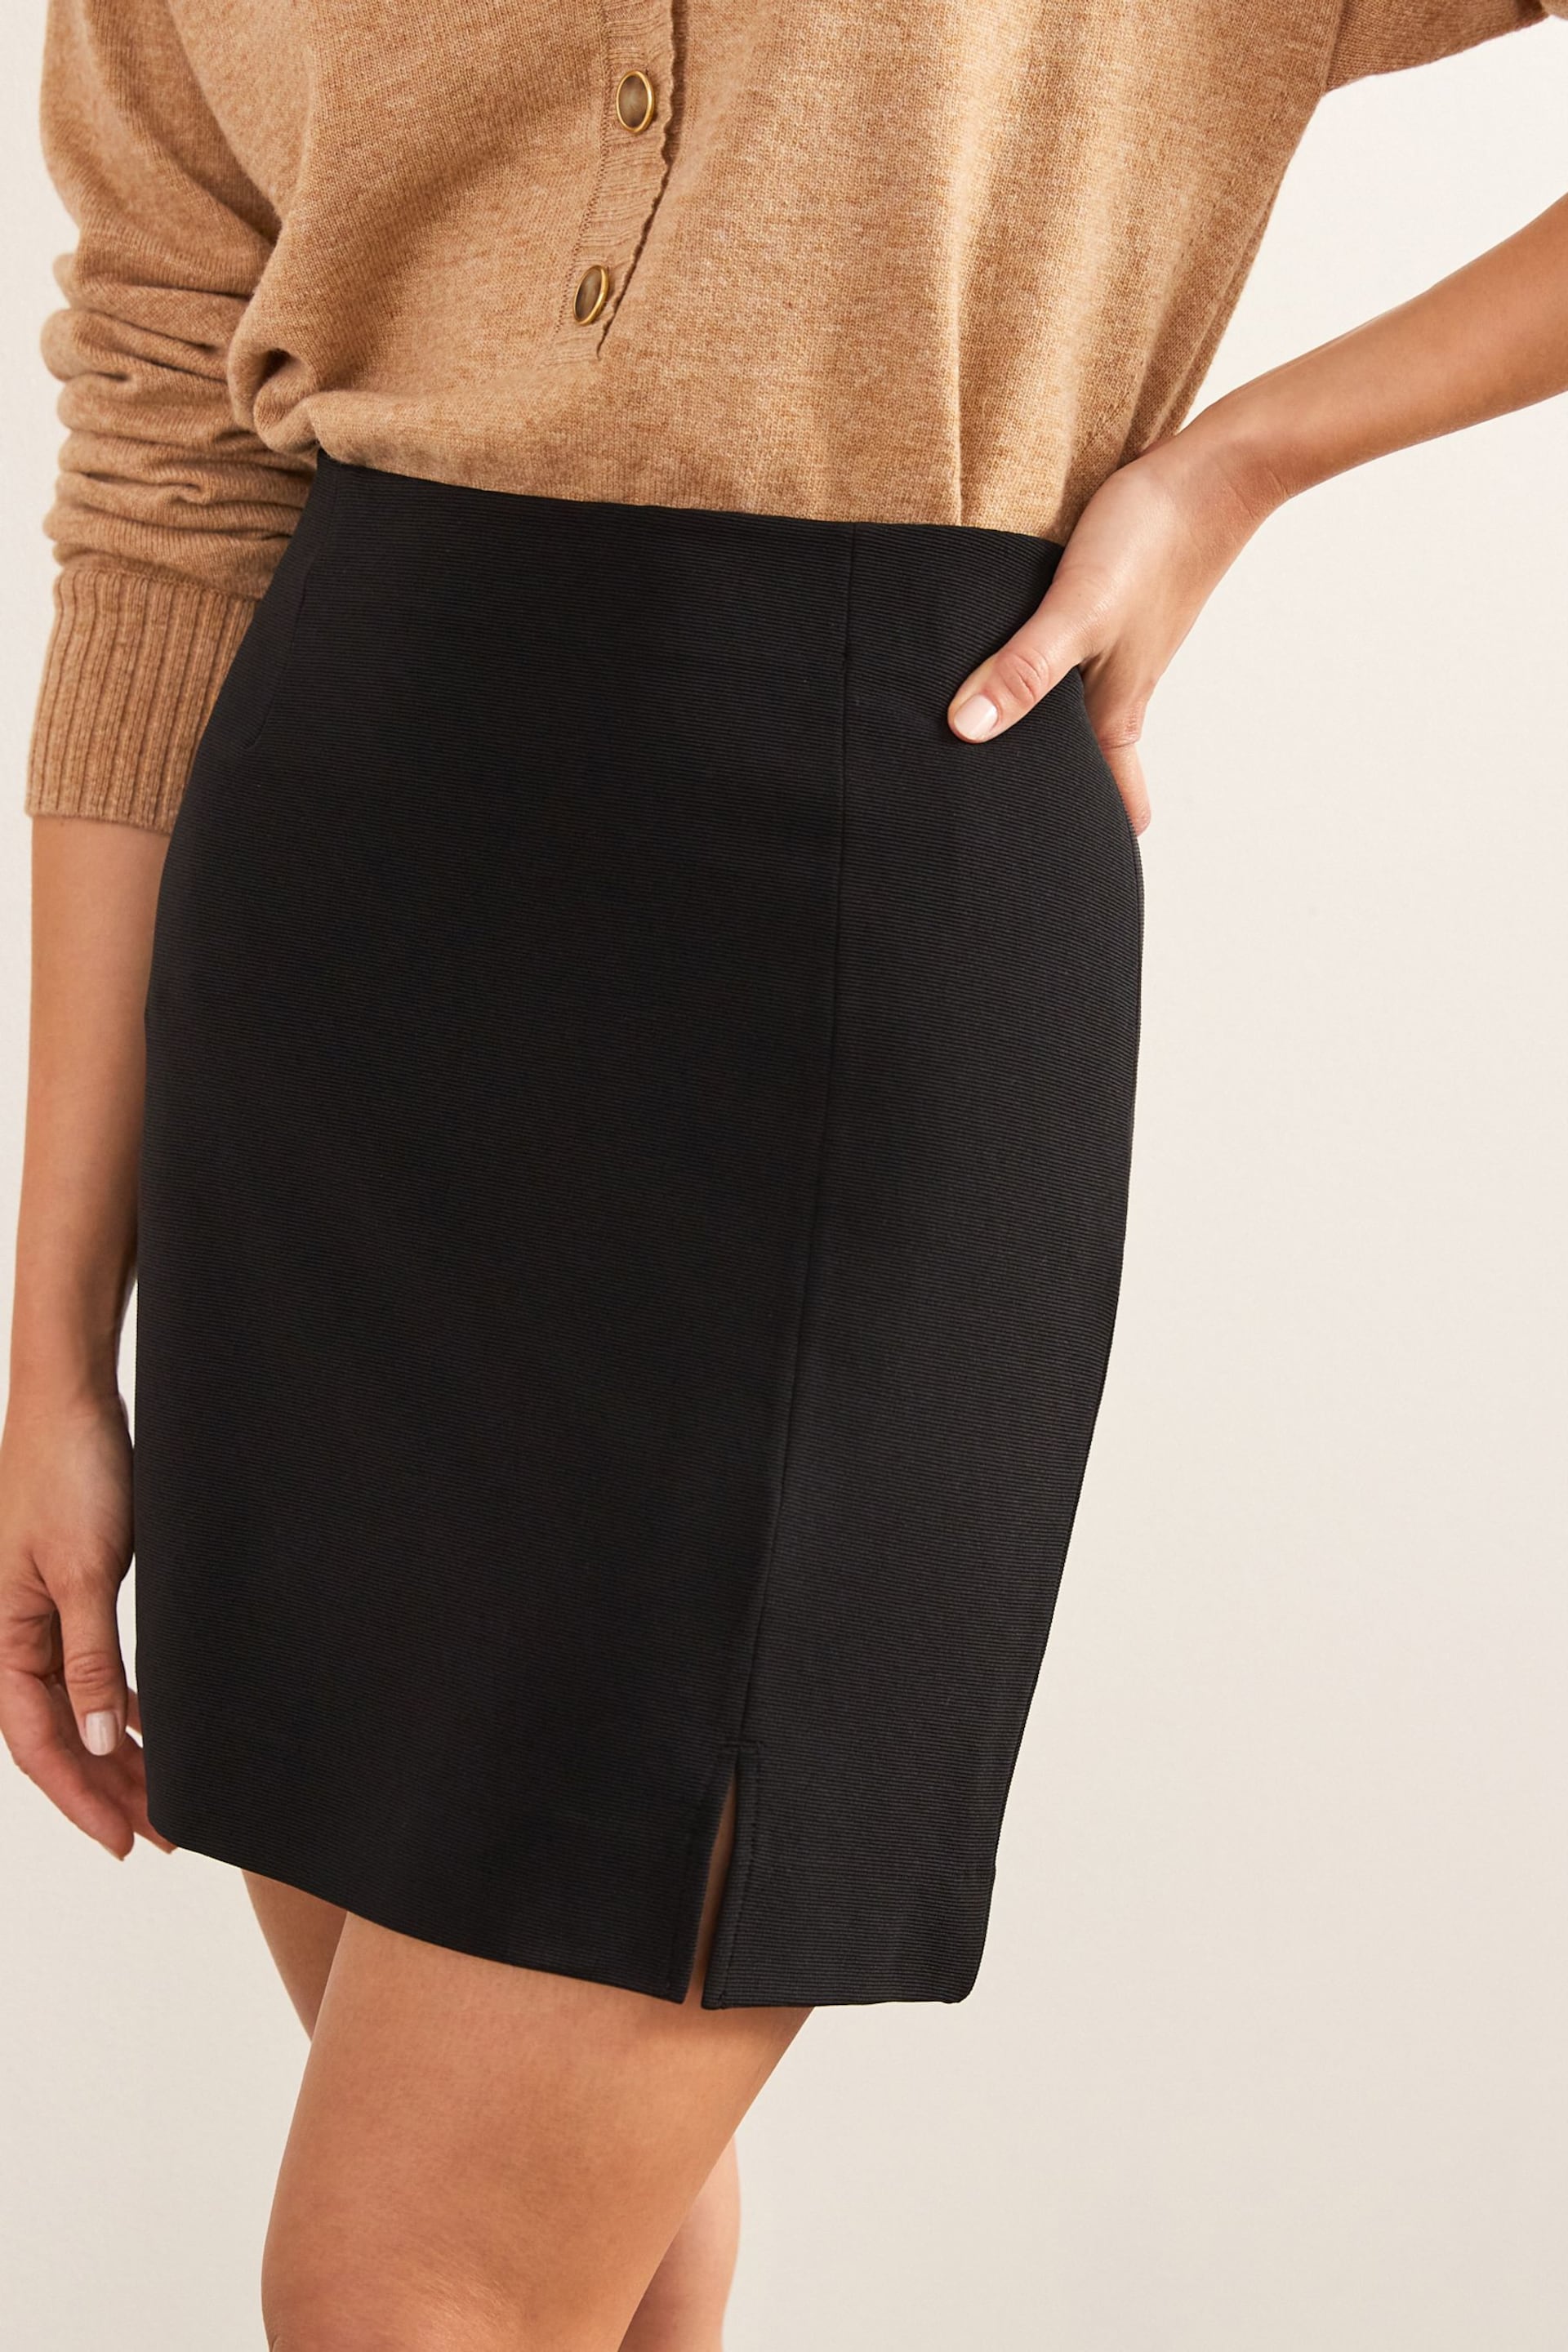 Black A-Line Mini Skirt - Image 4 of 5